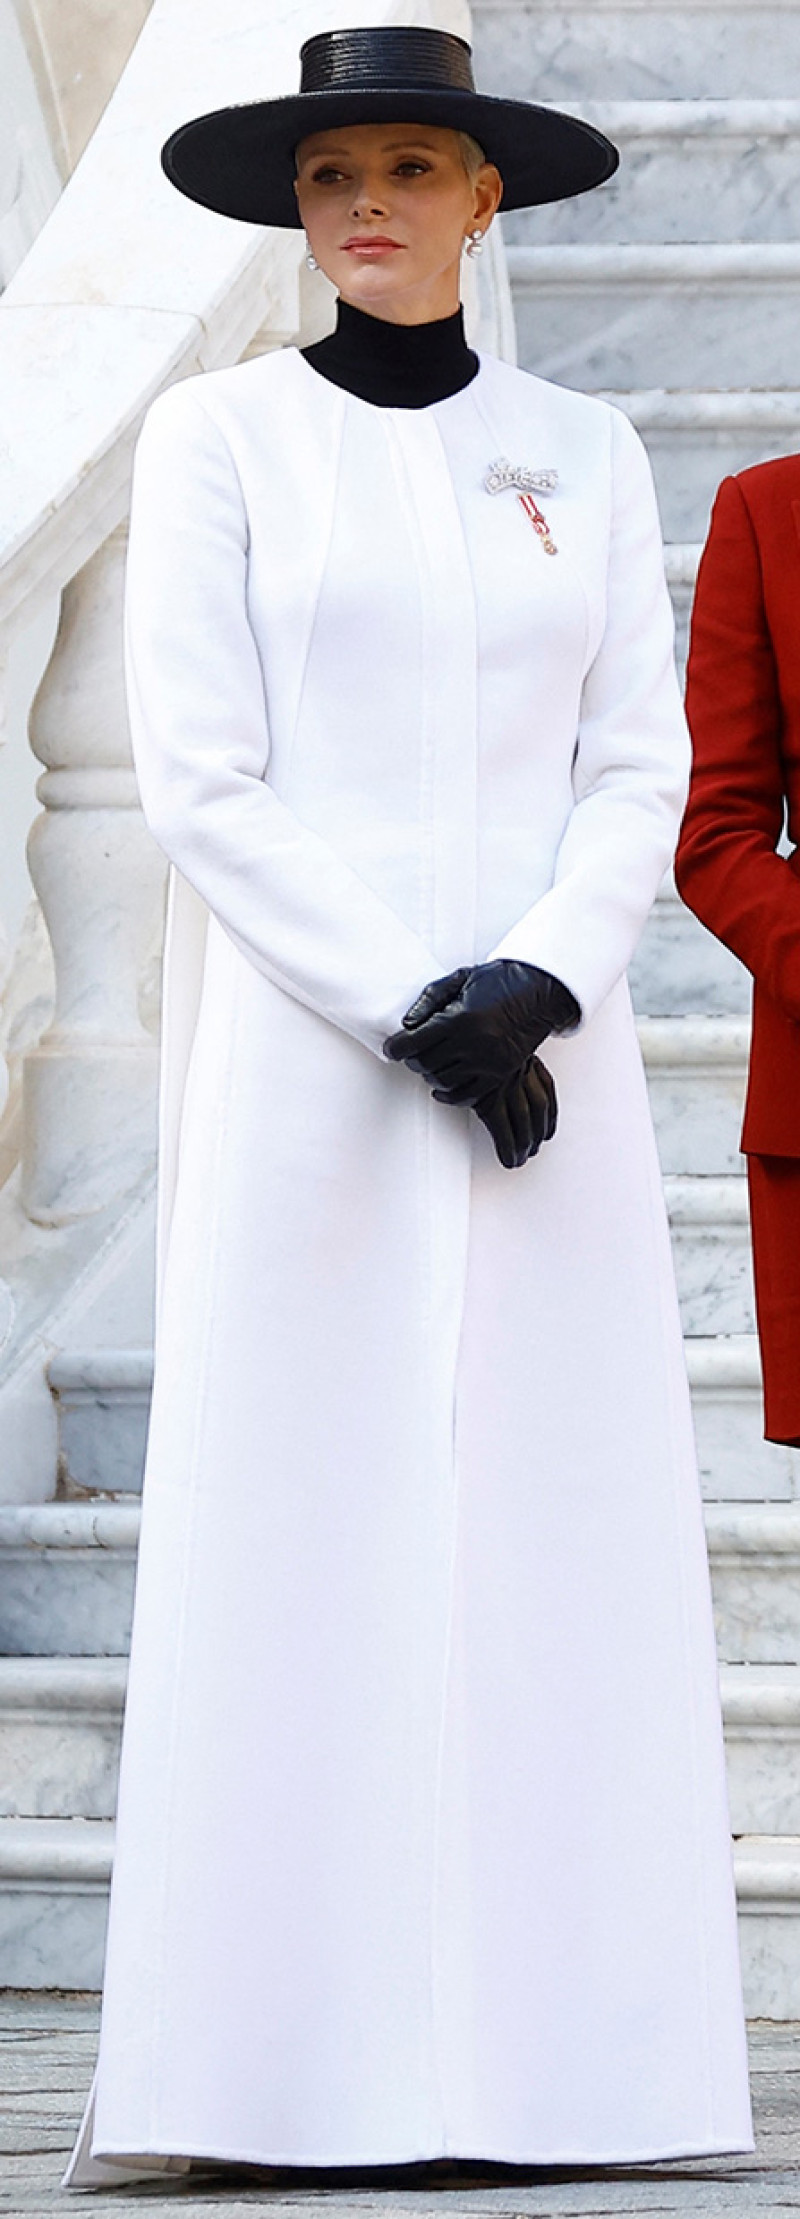 Charlene de mónaco vestido blanco